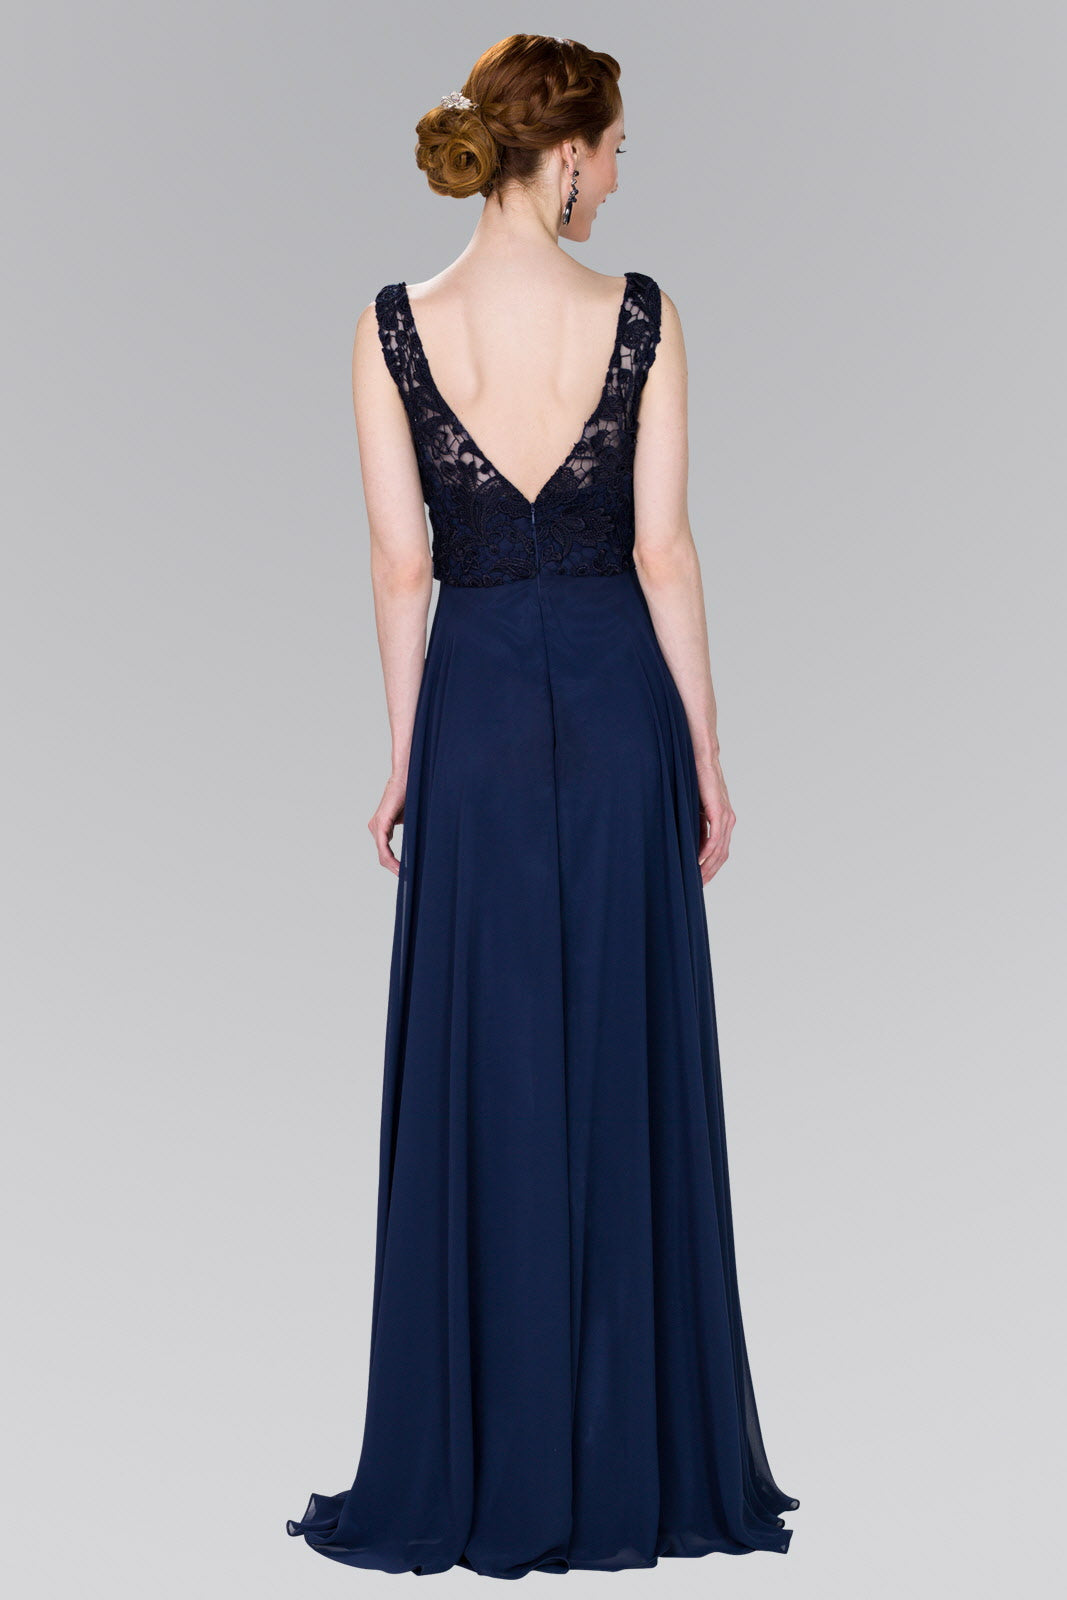 Lace Top Chiffon Long Formal Dress - The Dress Outlet Elizabeth K Navy